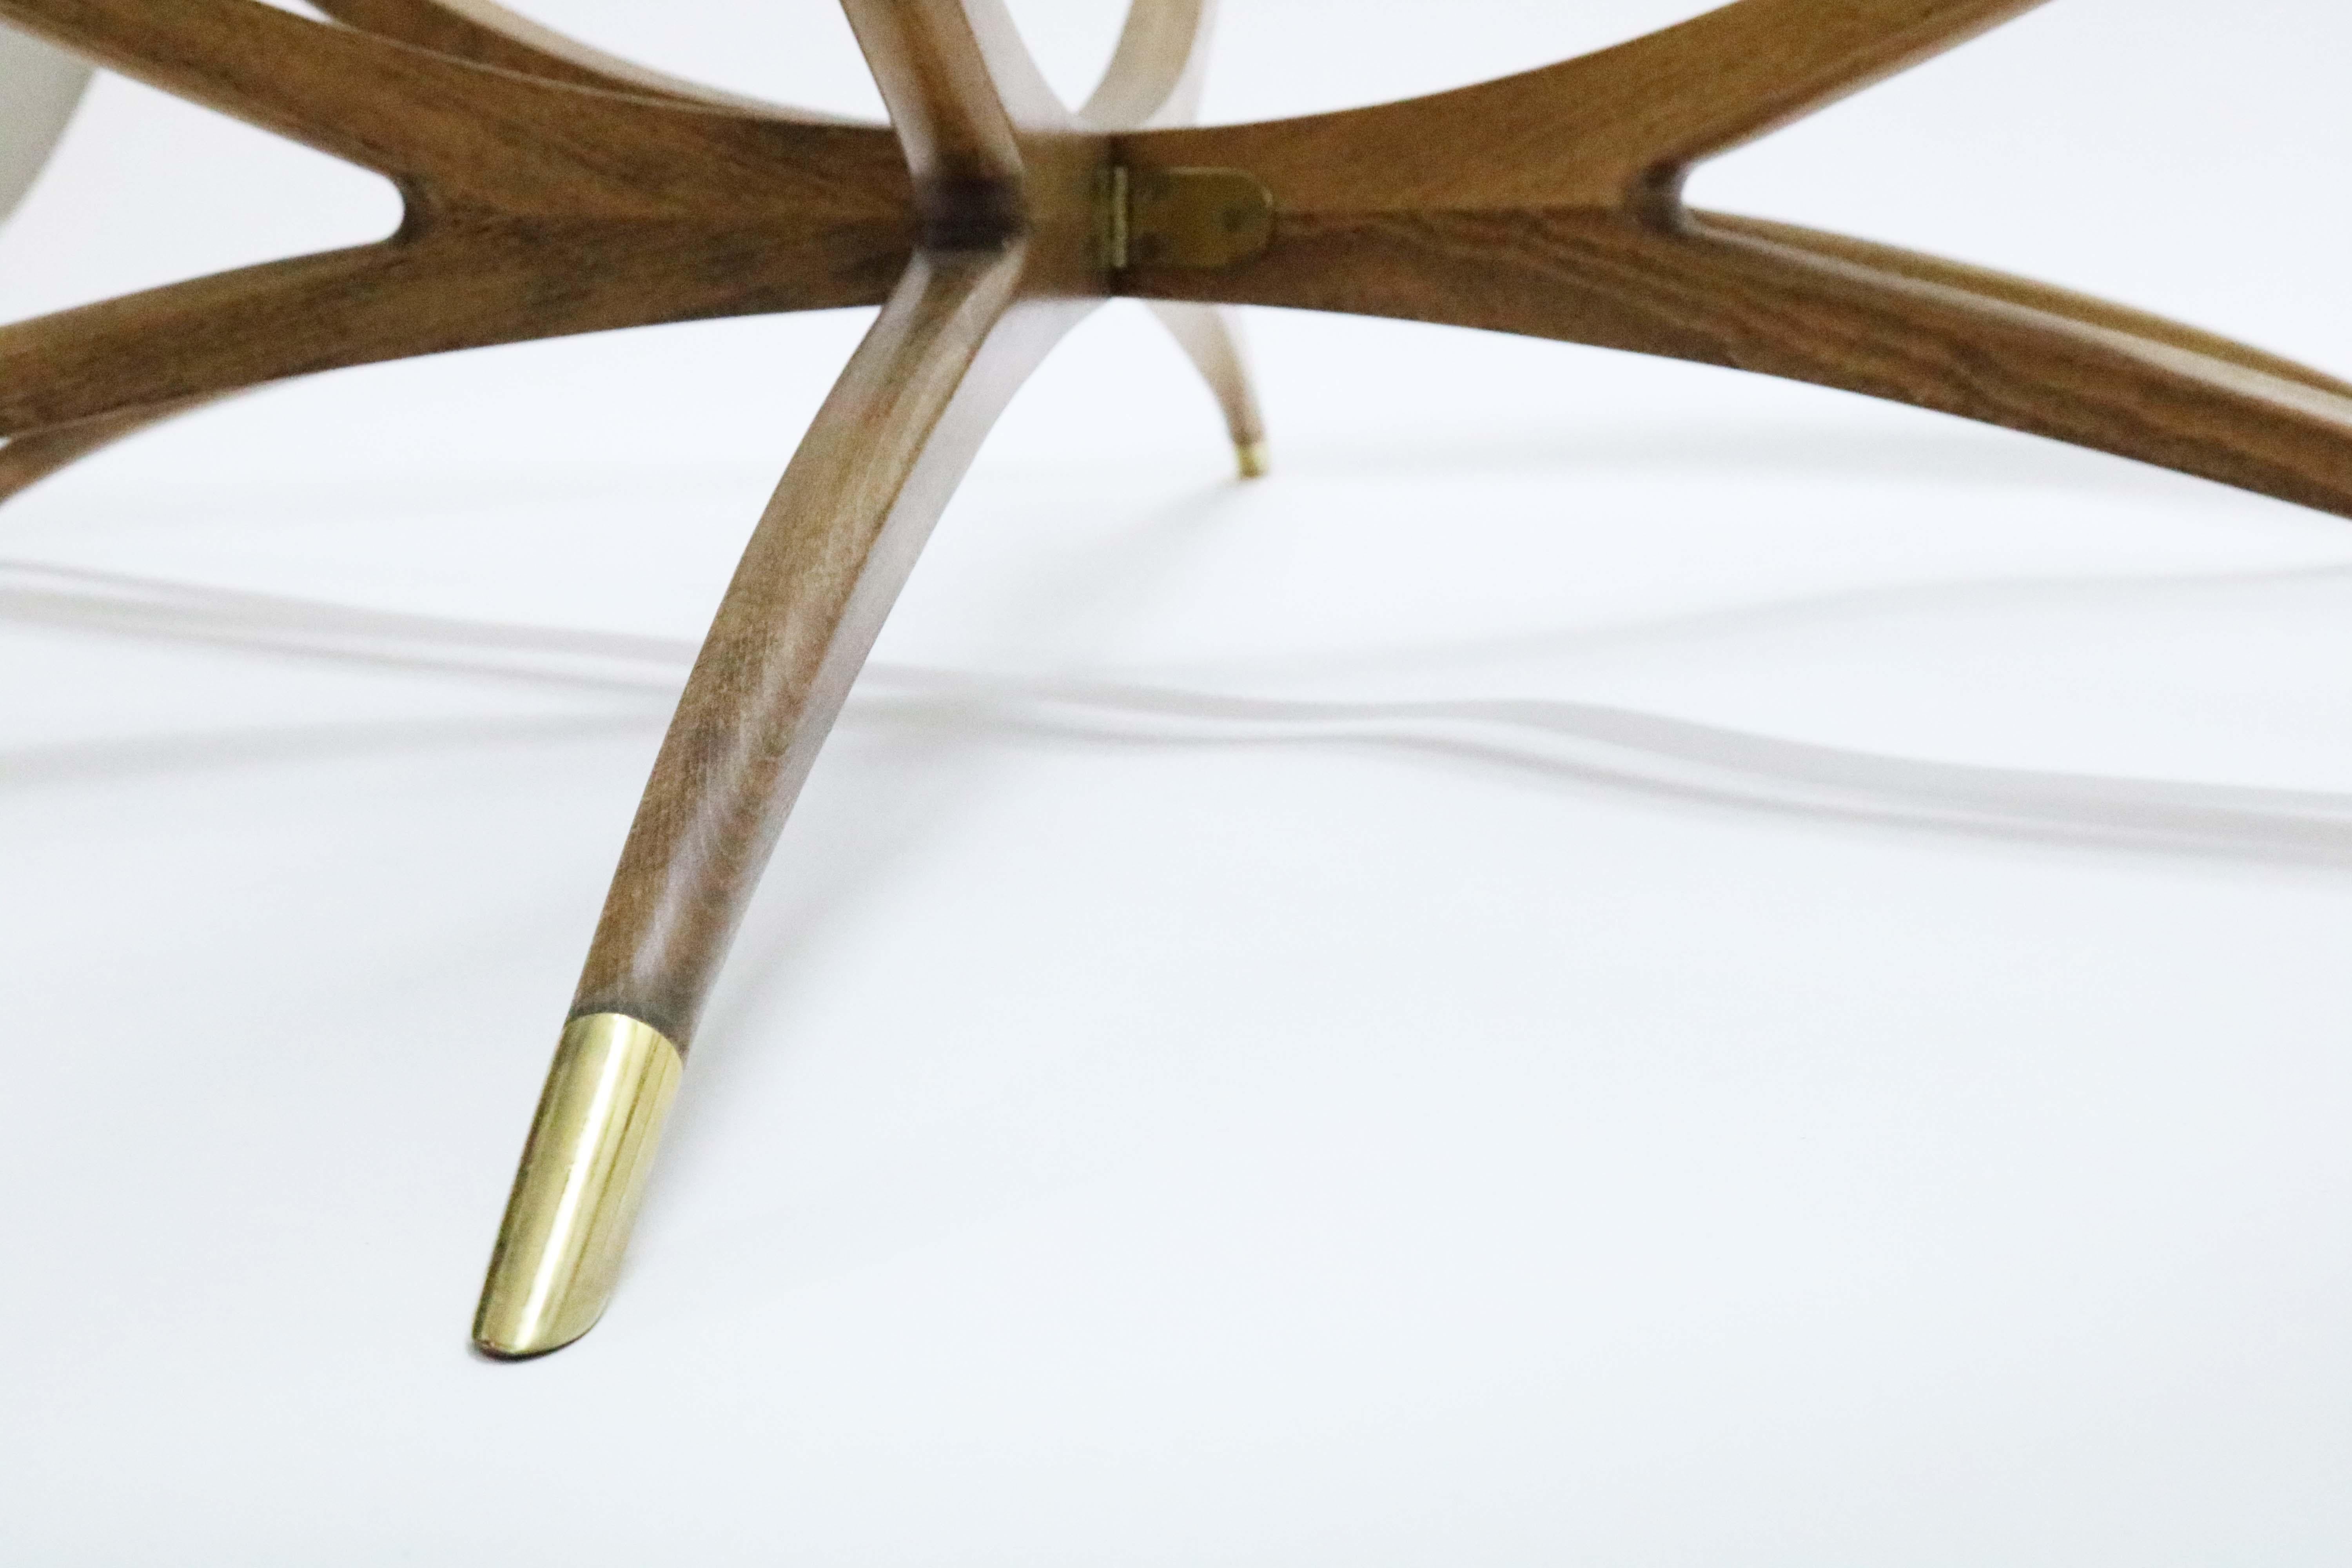 20th Century Danish Modern Mahogany Spider Leg Coffee Table